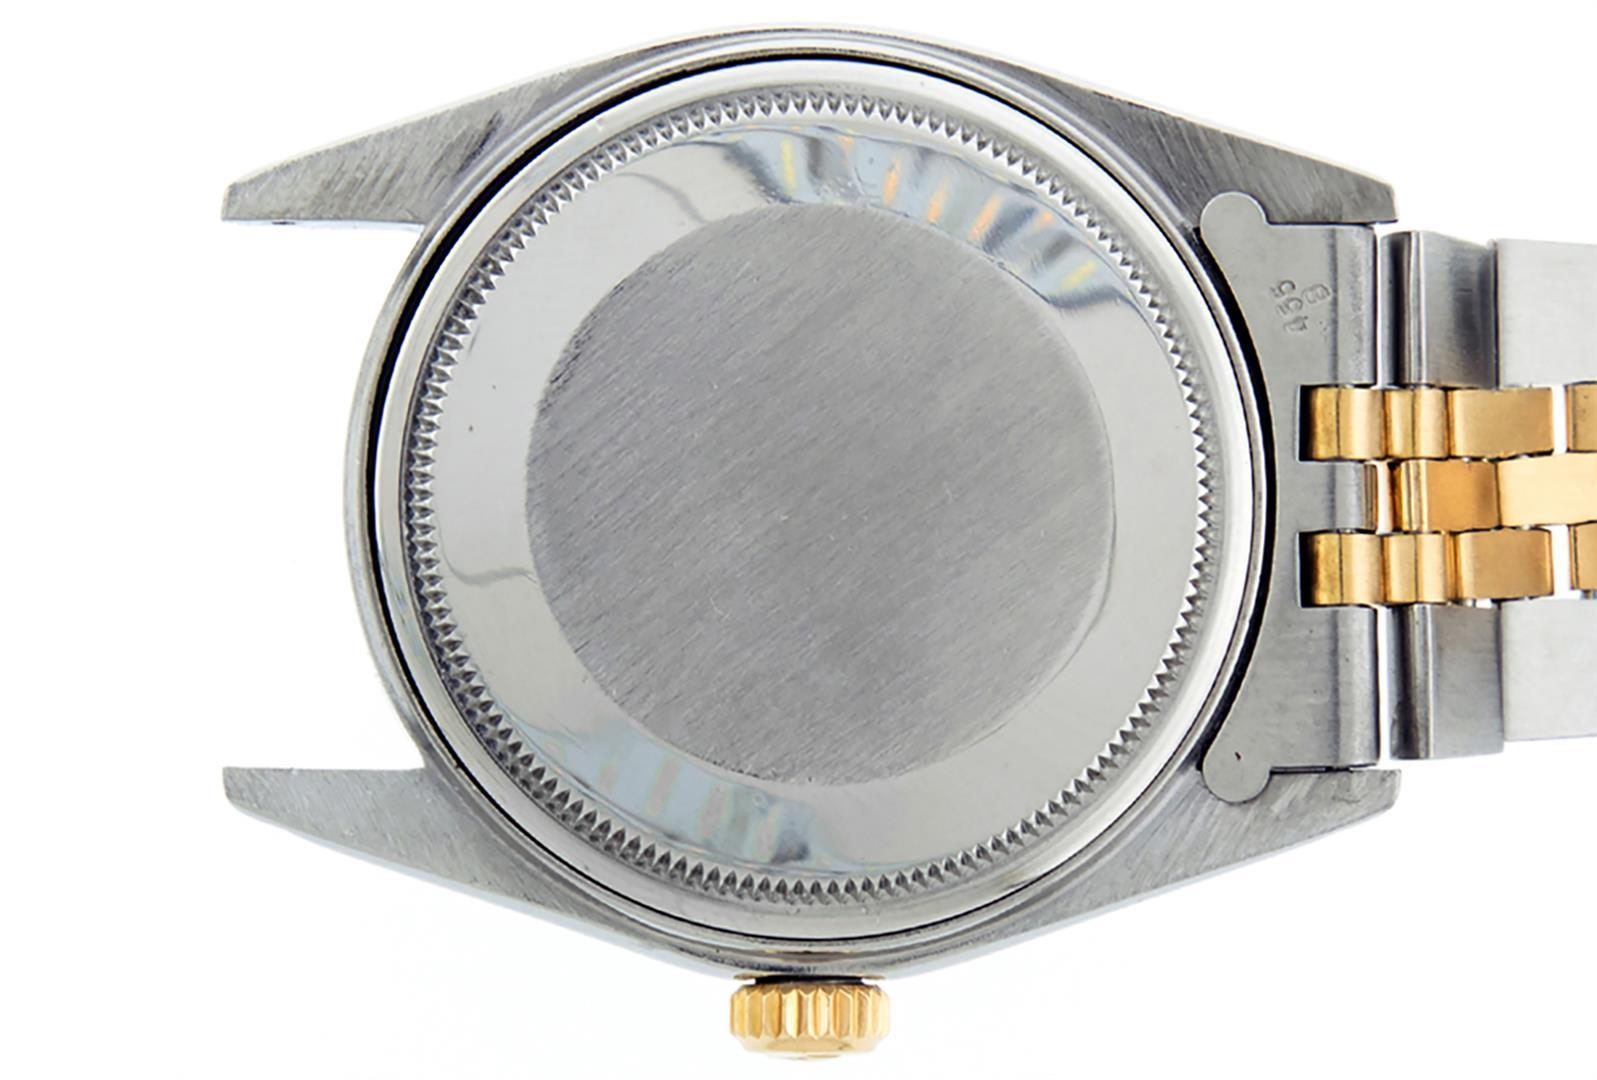 Rolex Mens 2 Tone Mother Of Pearl VS Diamond 36MM Datejust Wristwatch